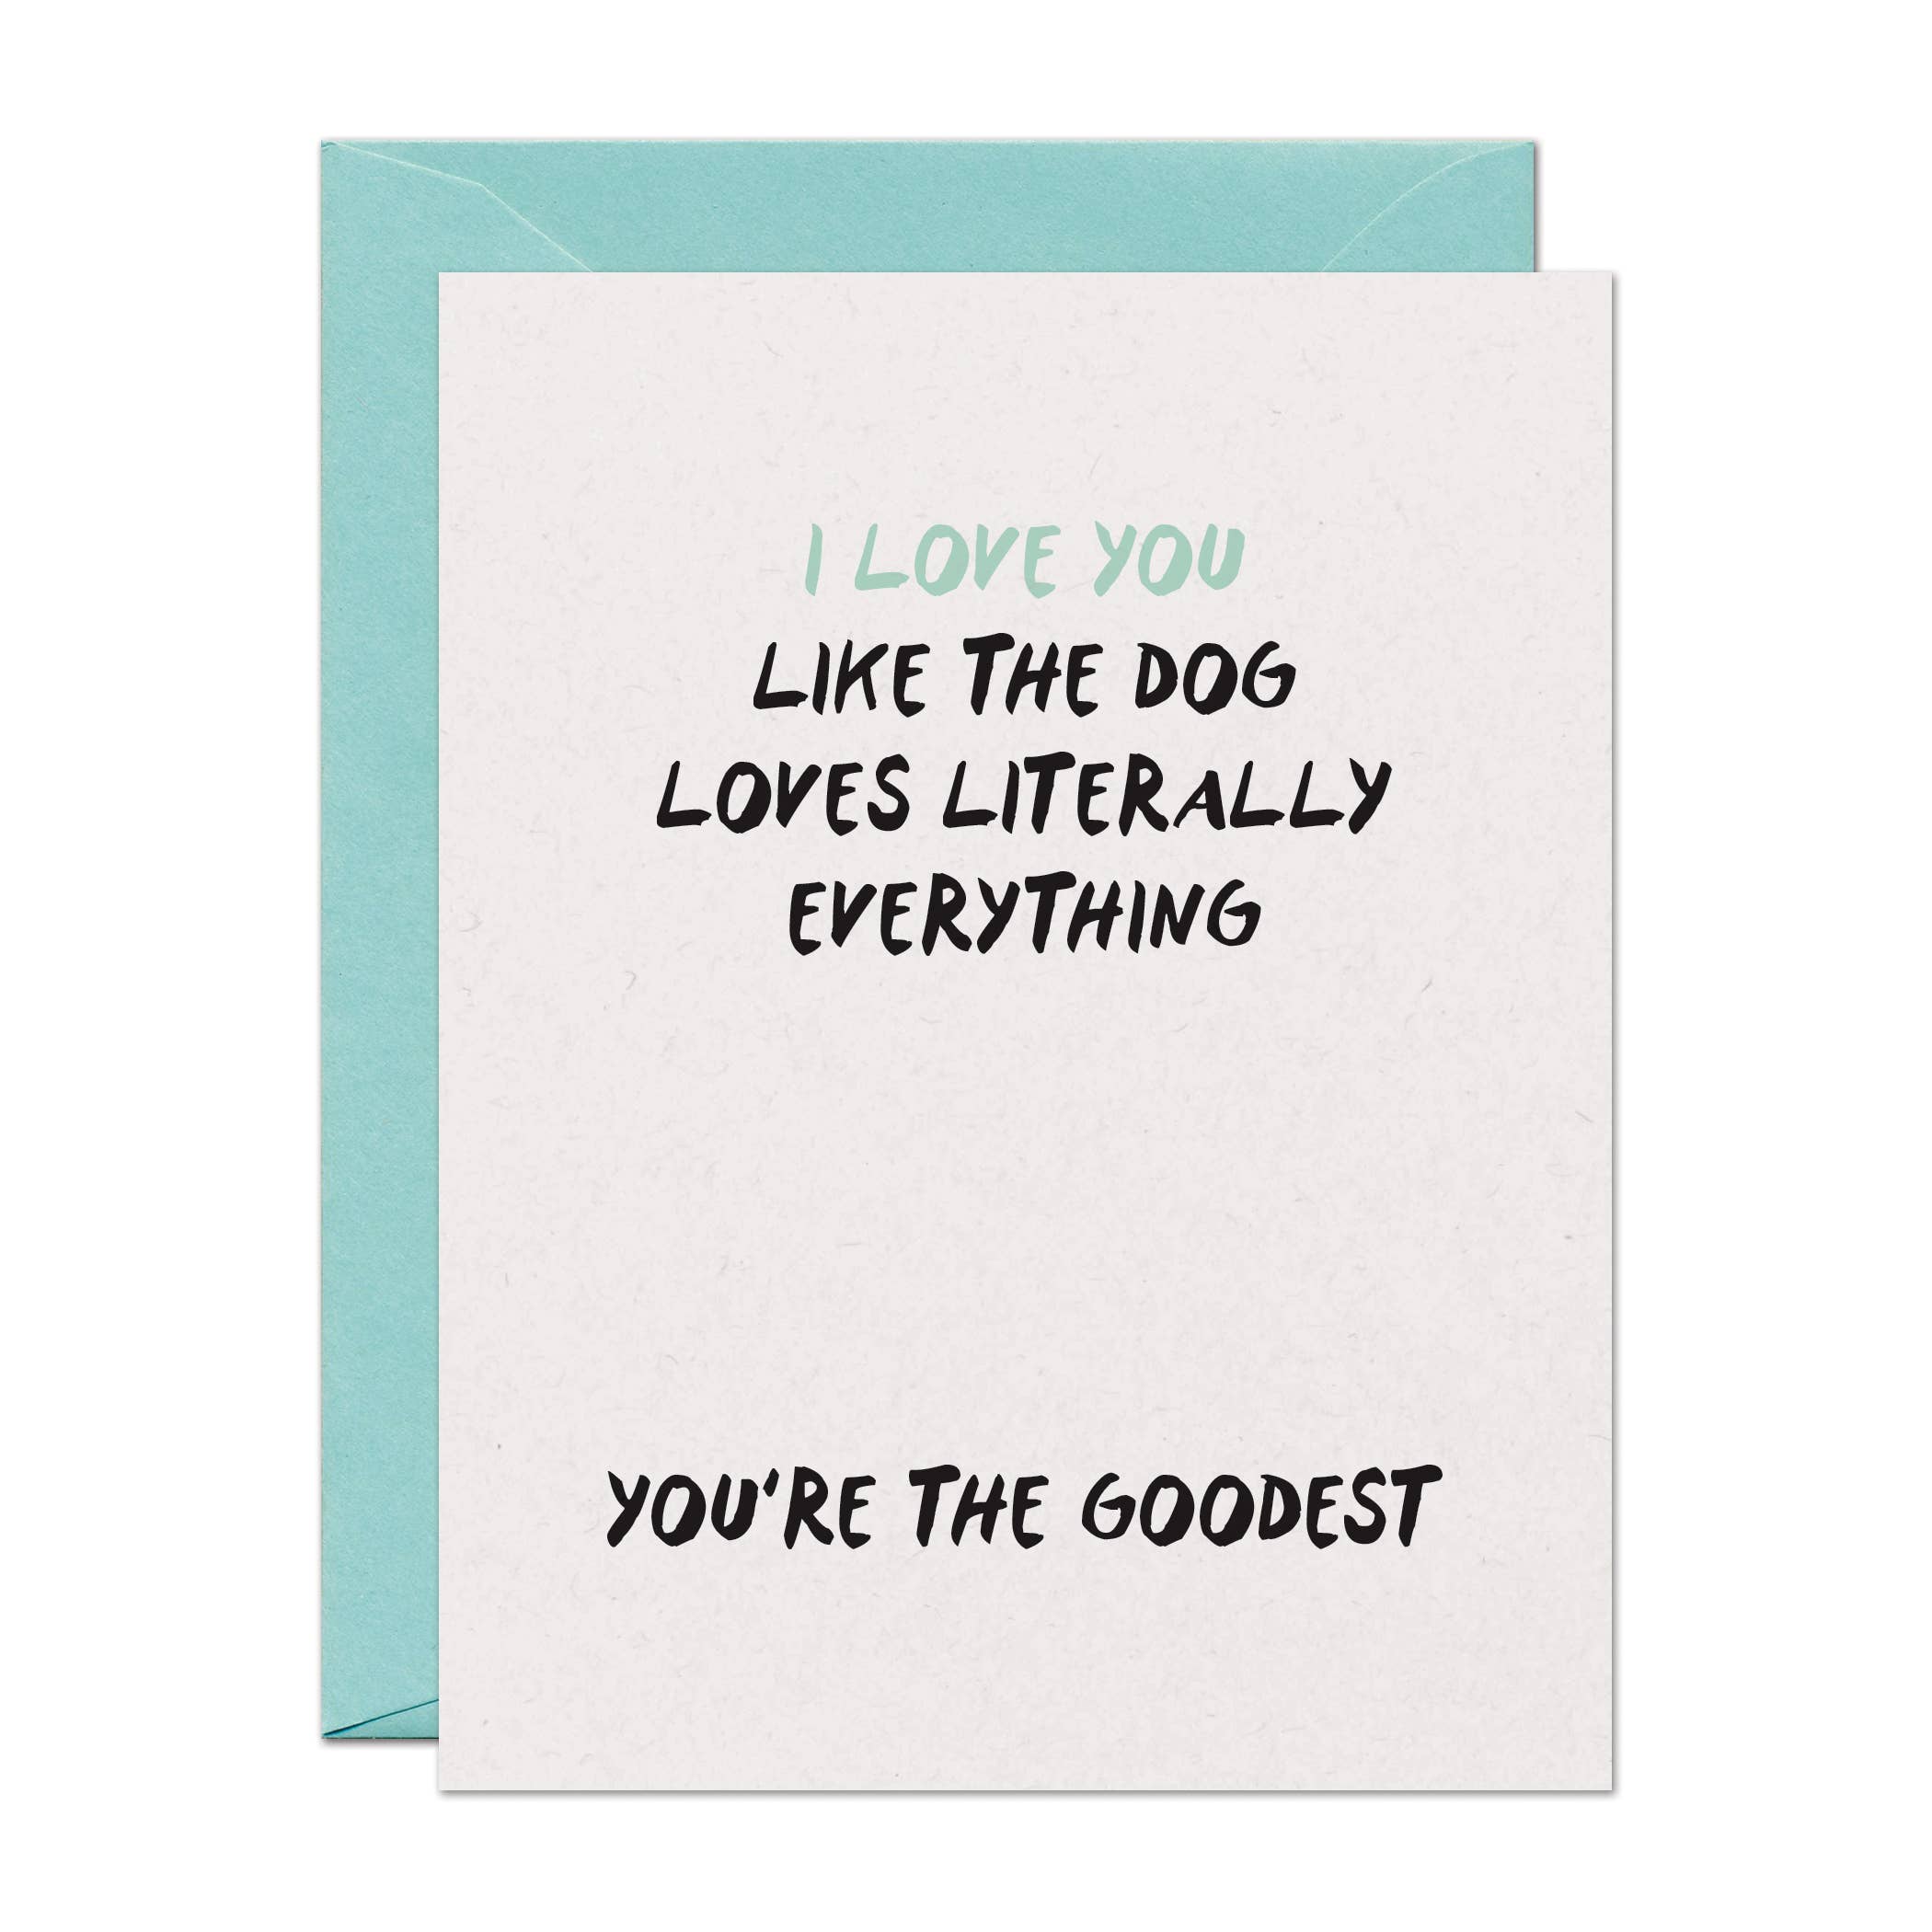 Goodest Dog Love Card